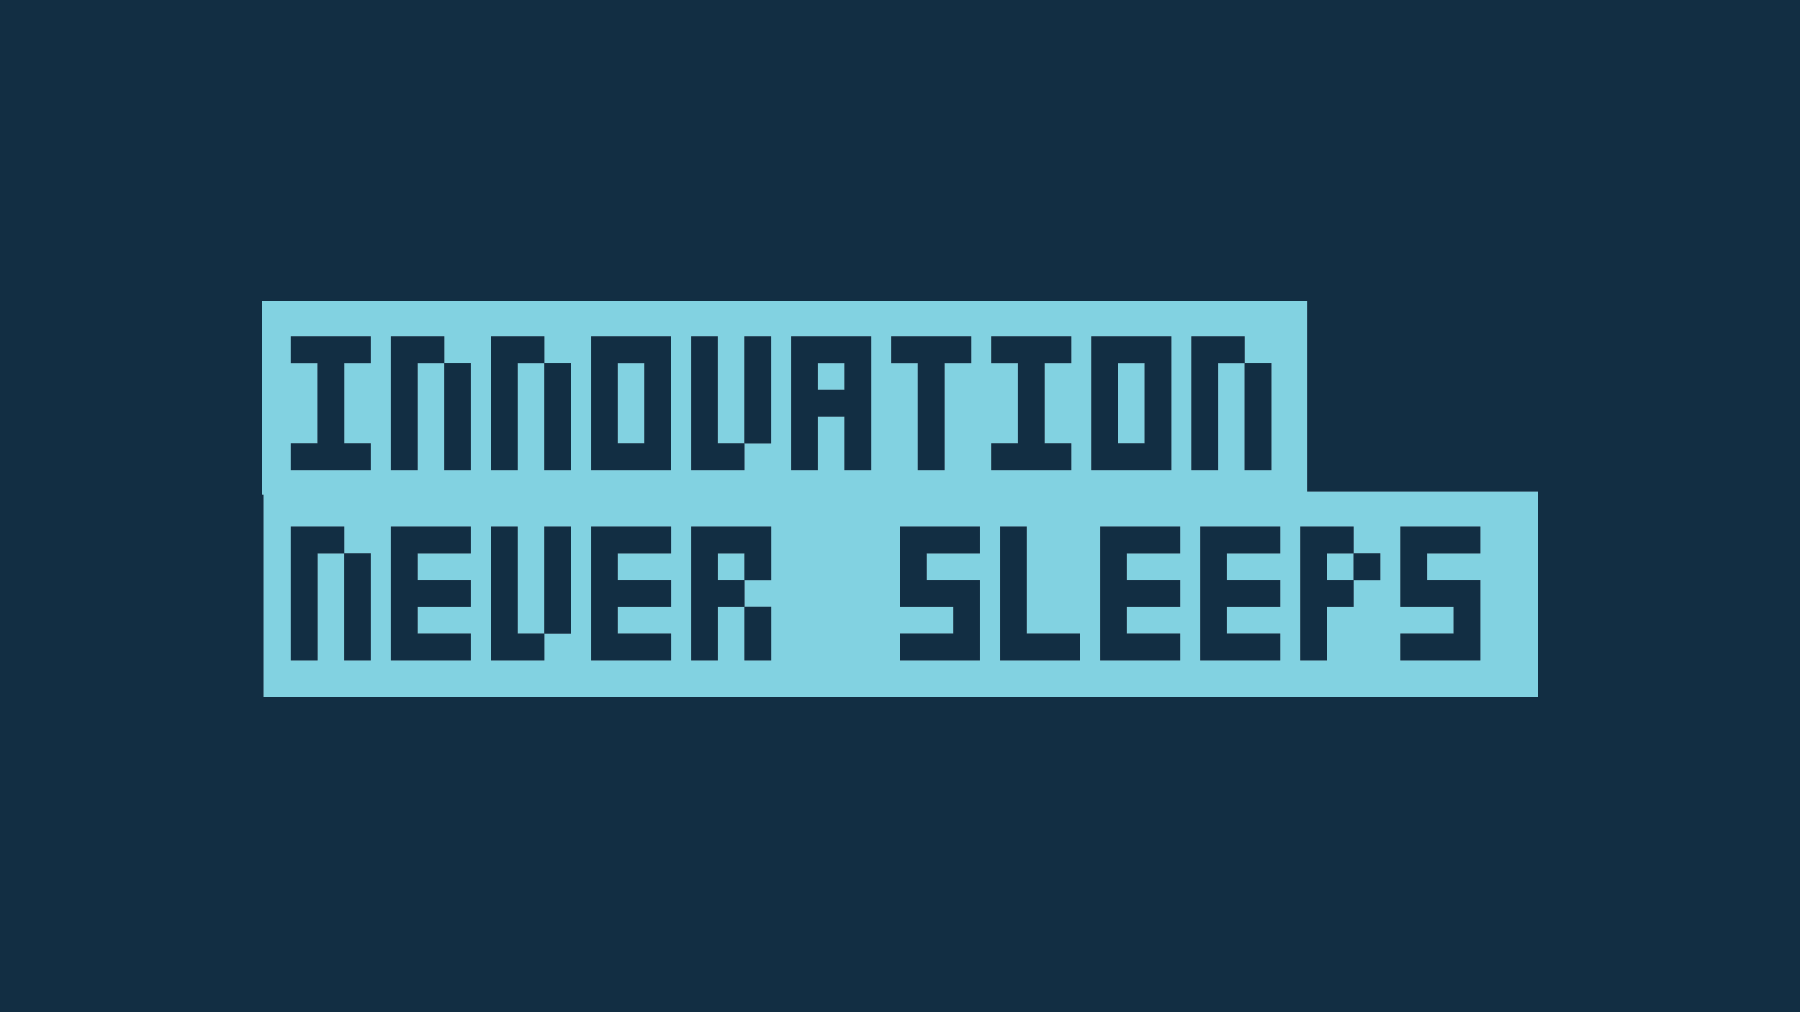 Innovation never sleeps